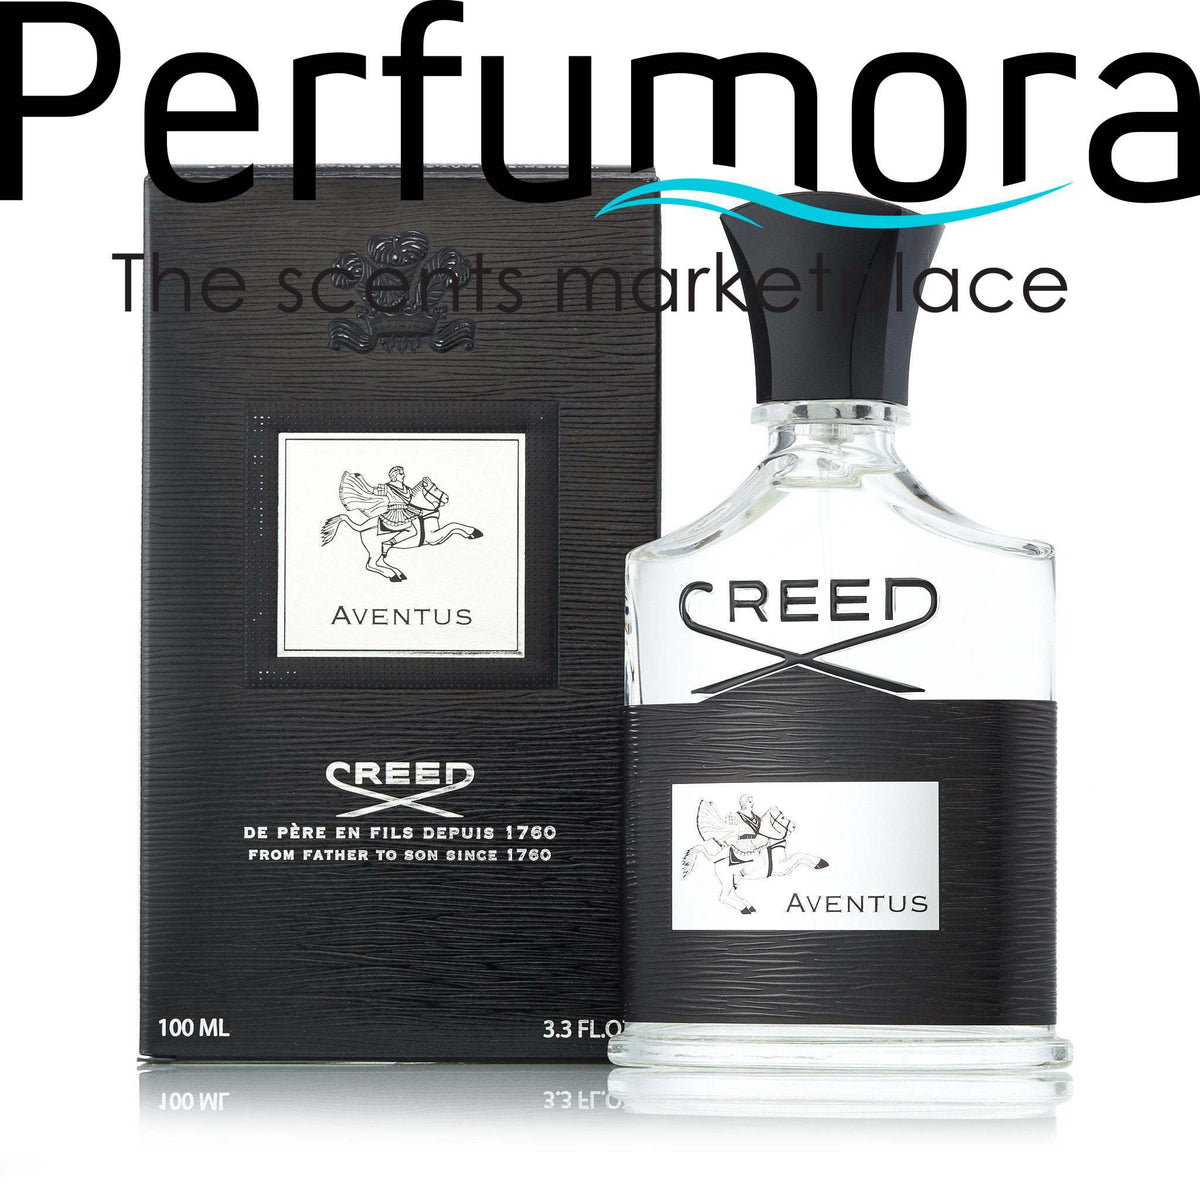 Aventus For Men By Creed Eau De Parfum Spray